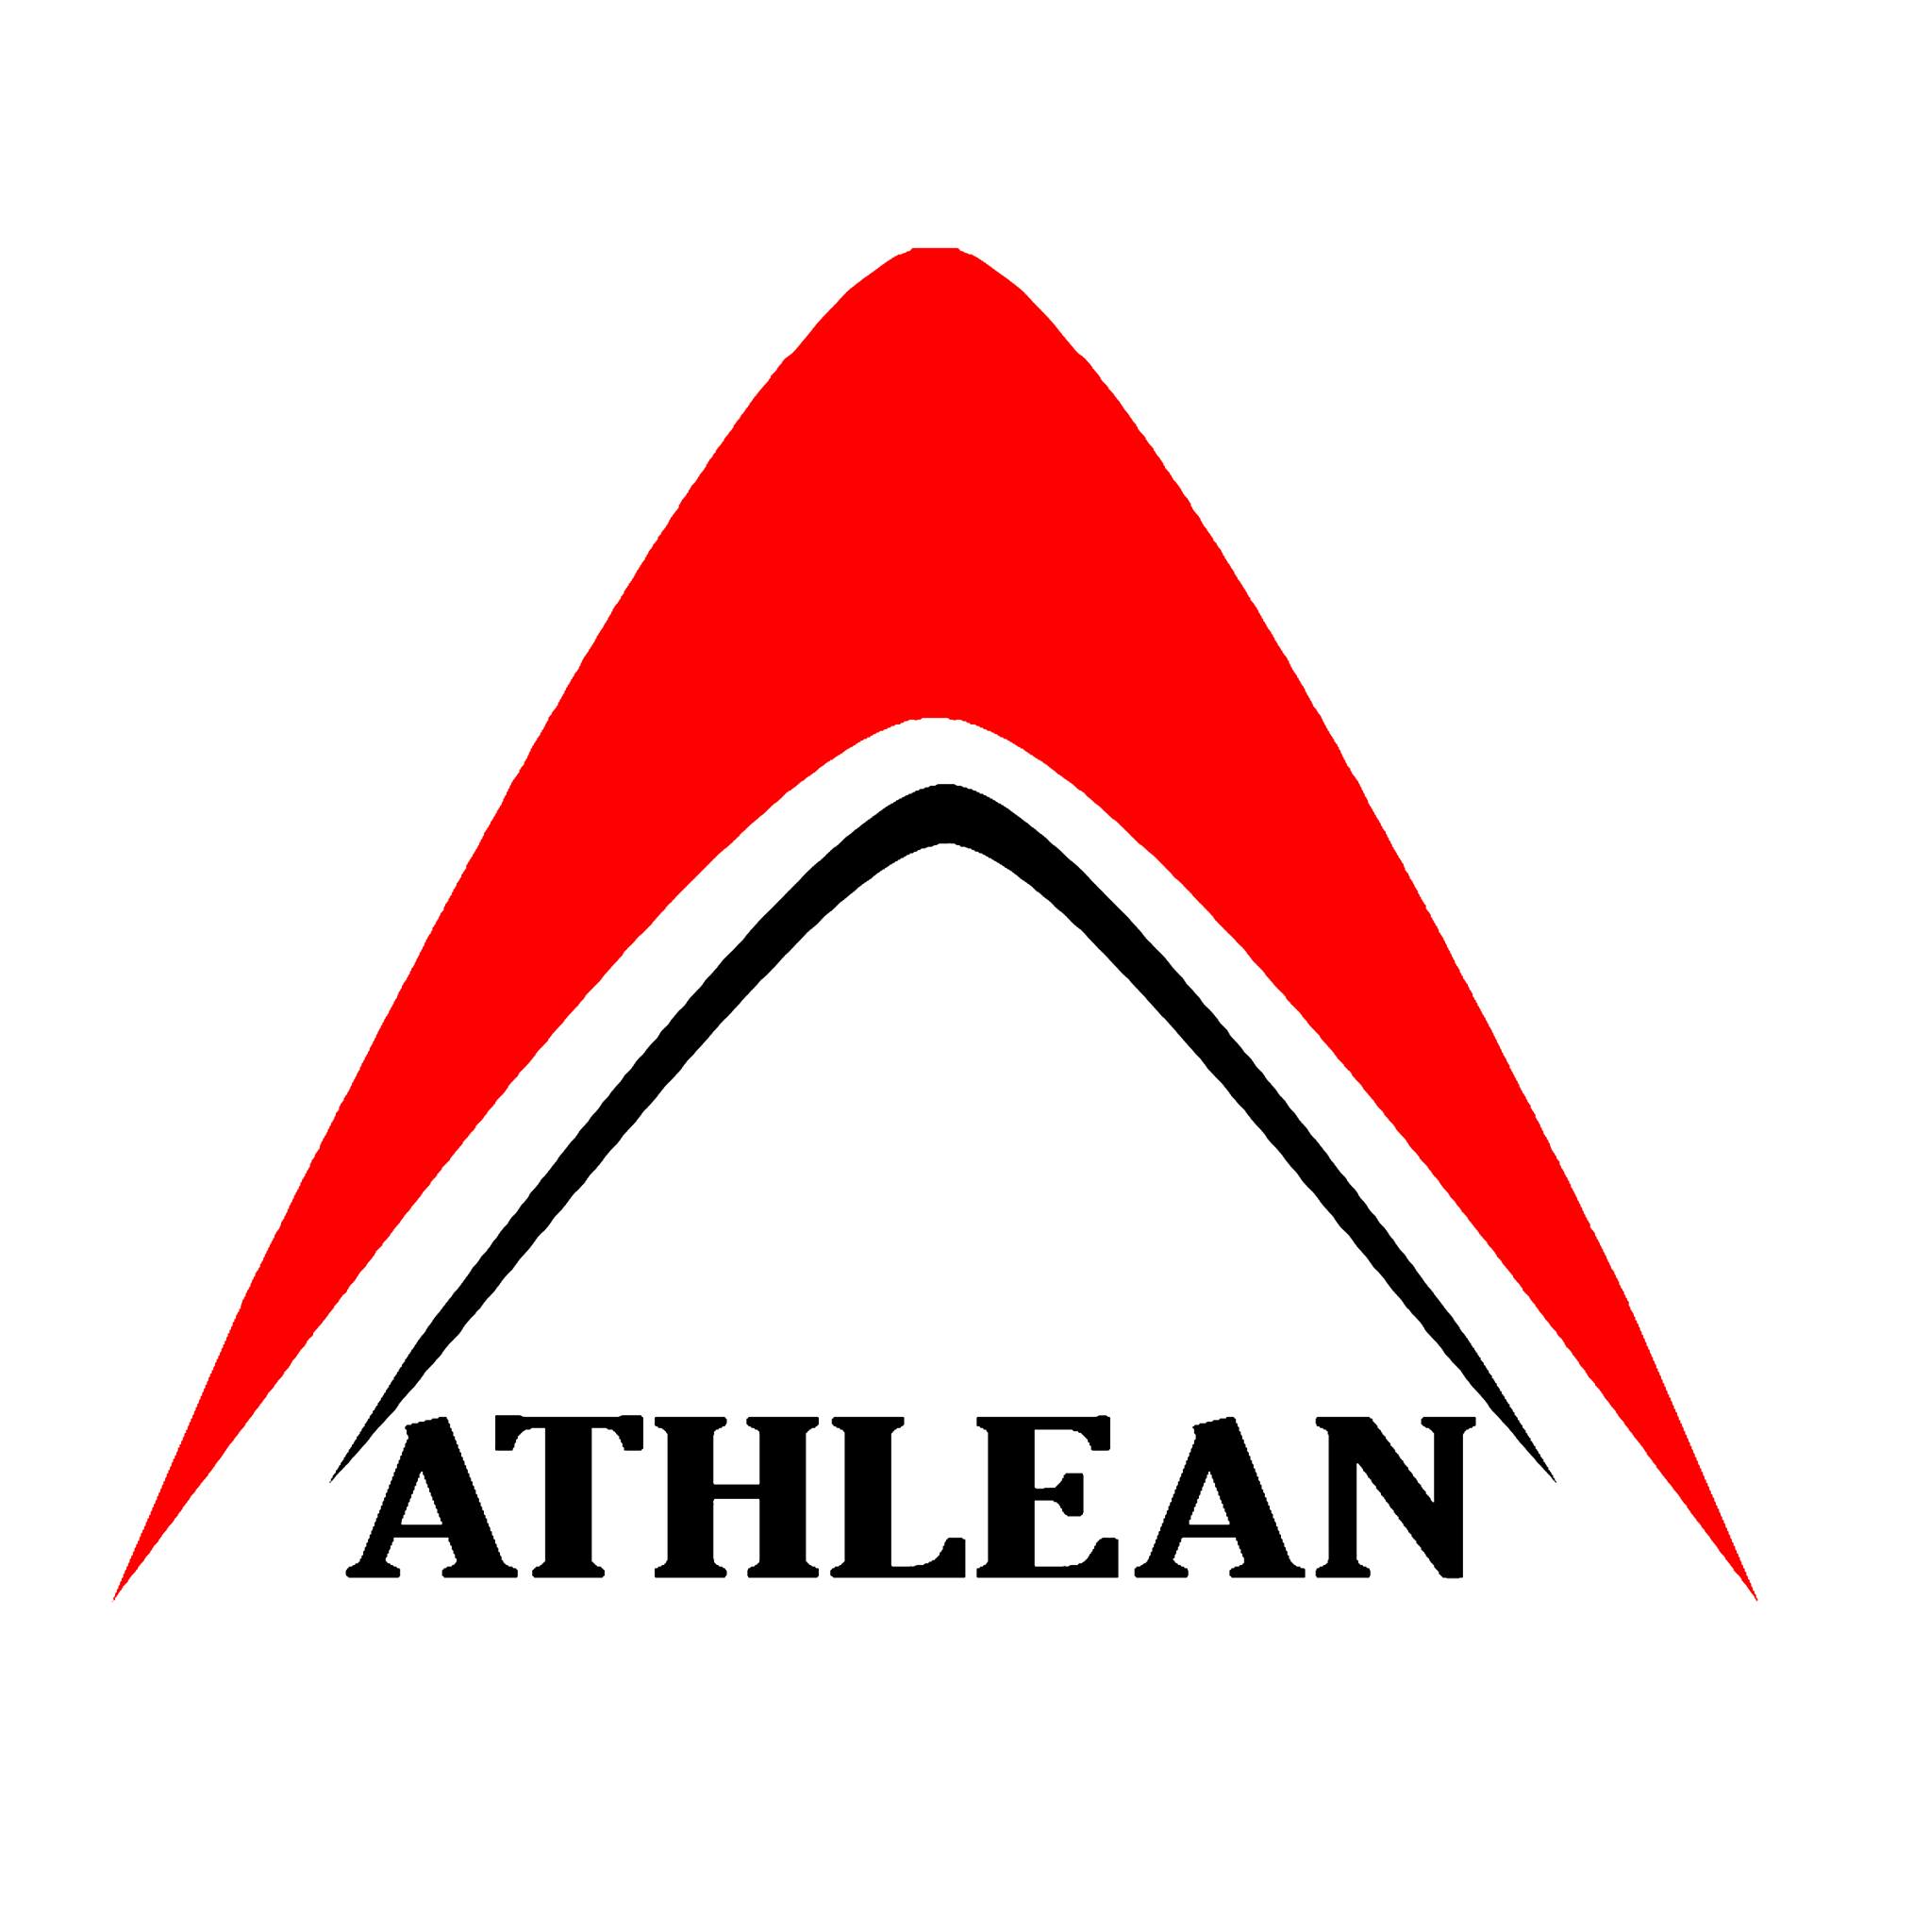 Athlean Fitness Club Logo